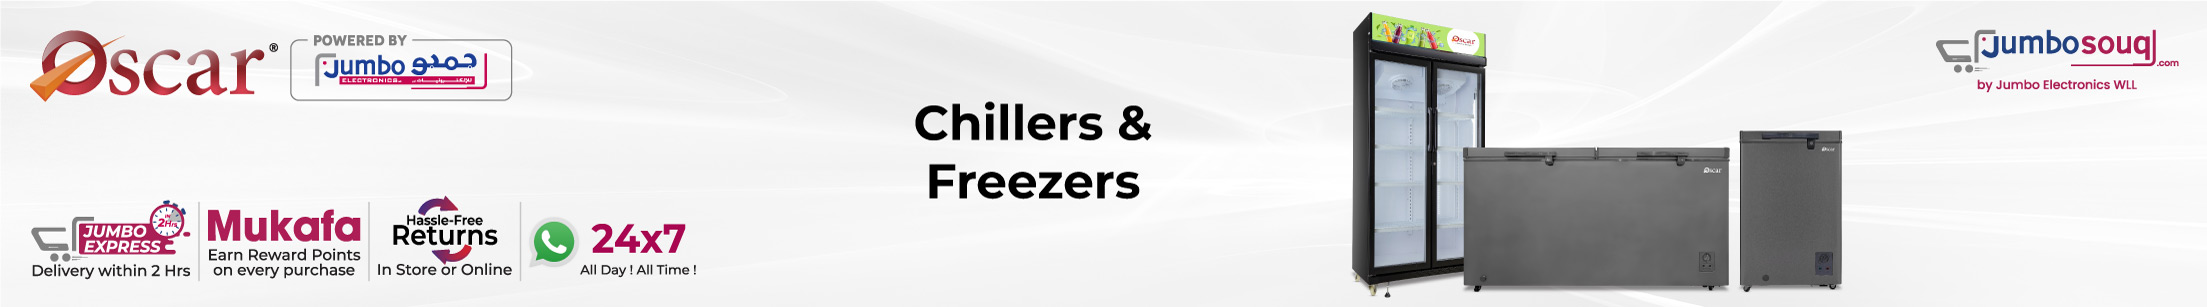 Chiller & Freezer